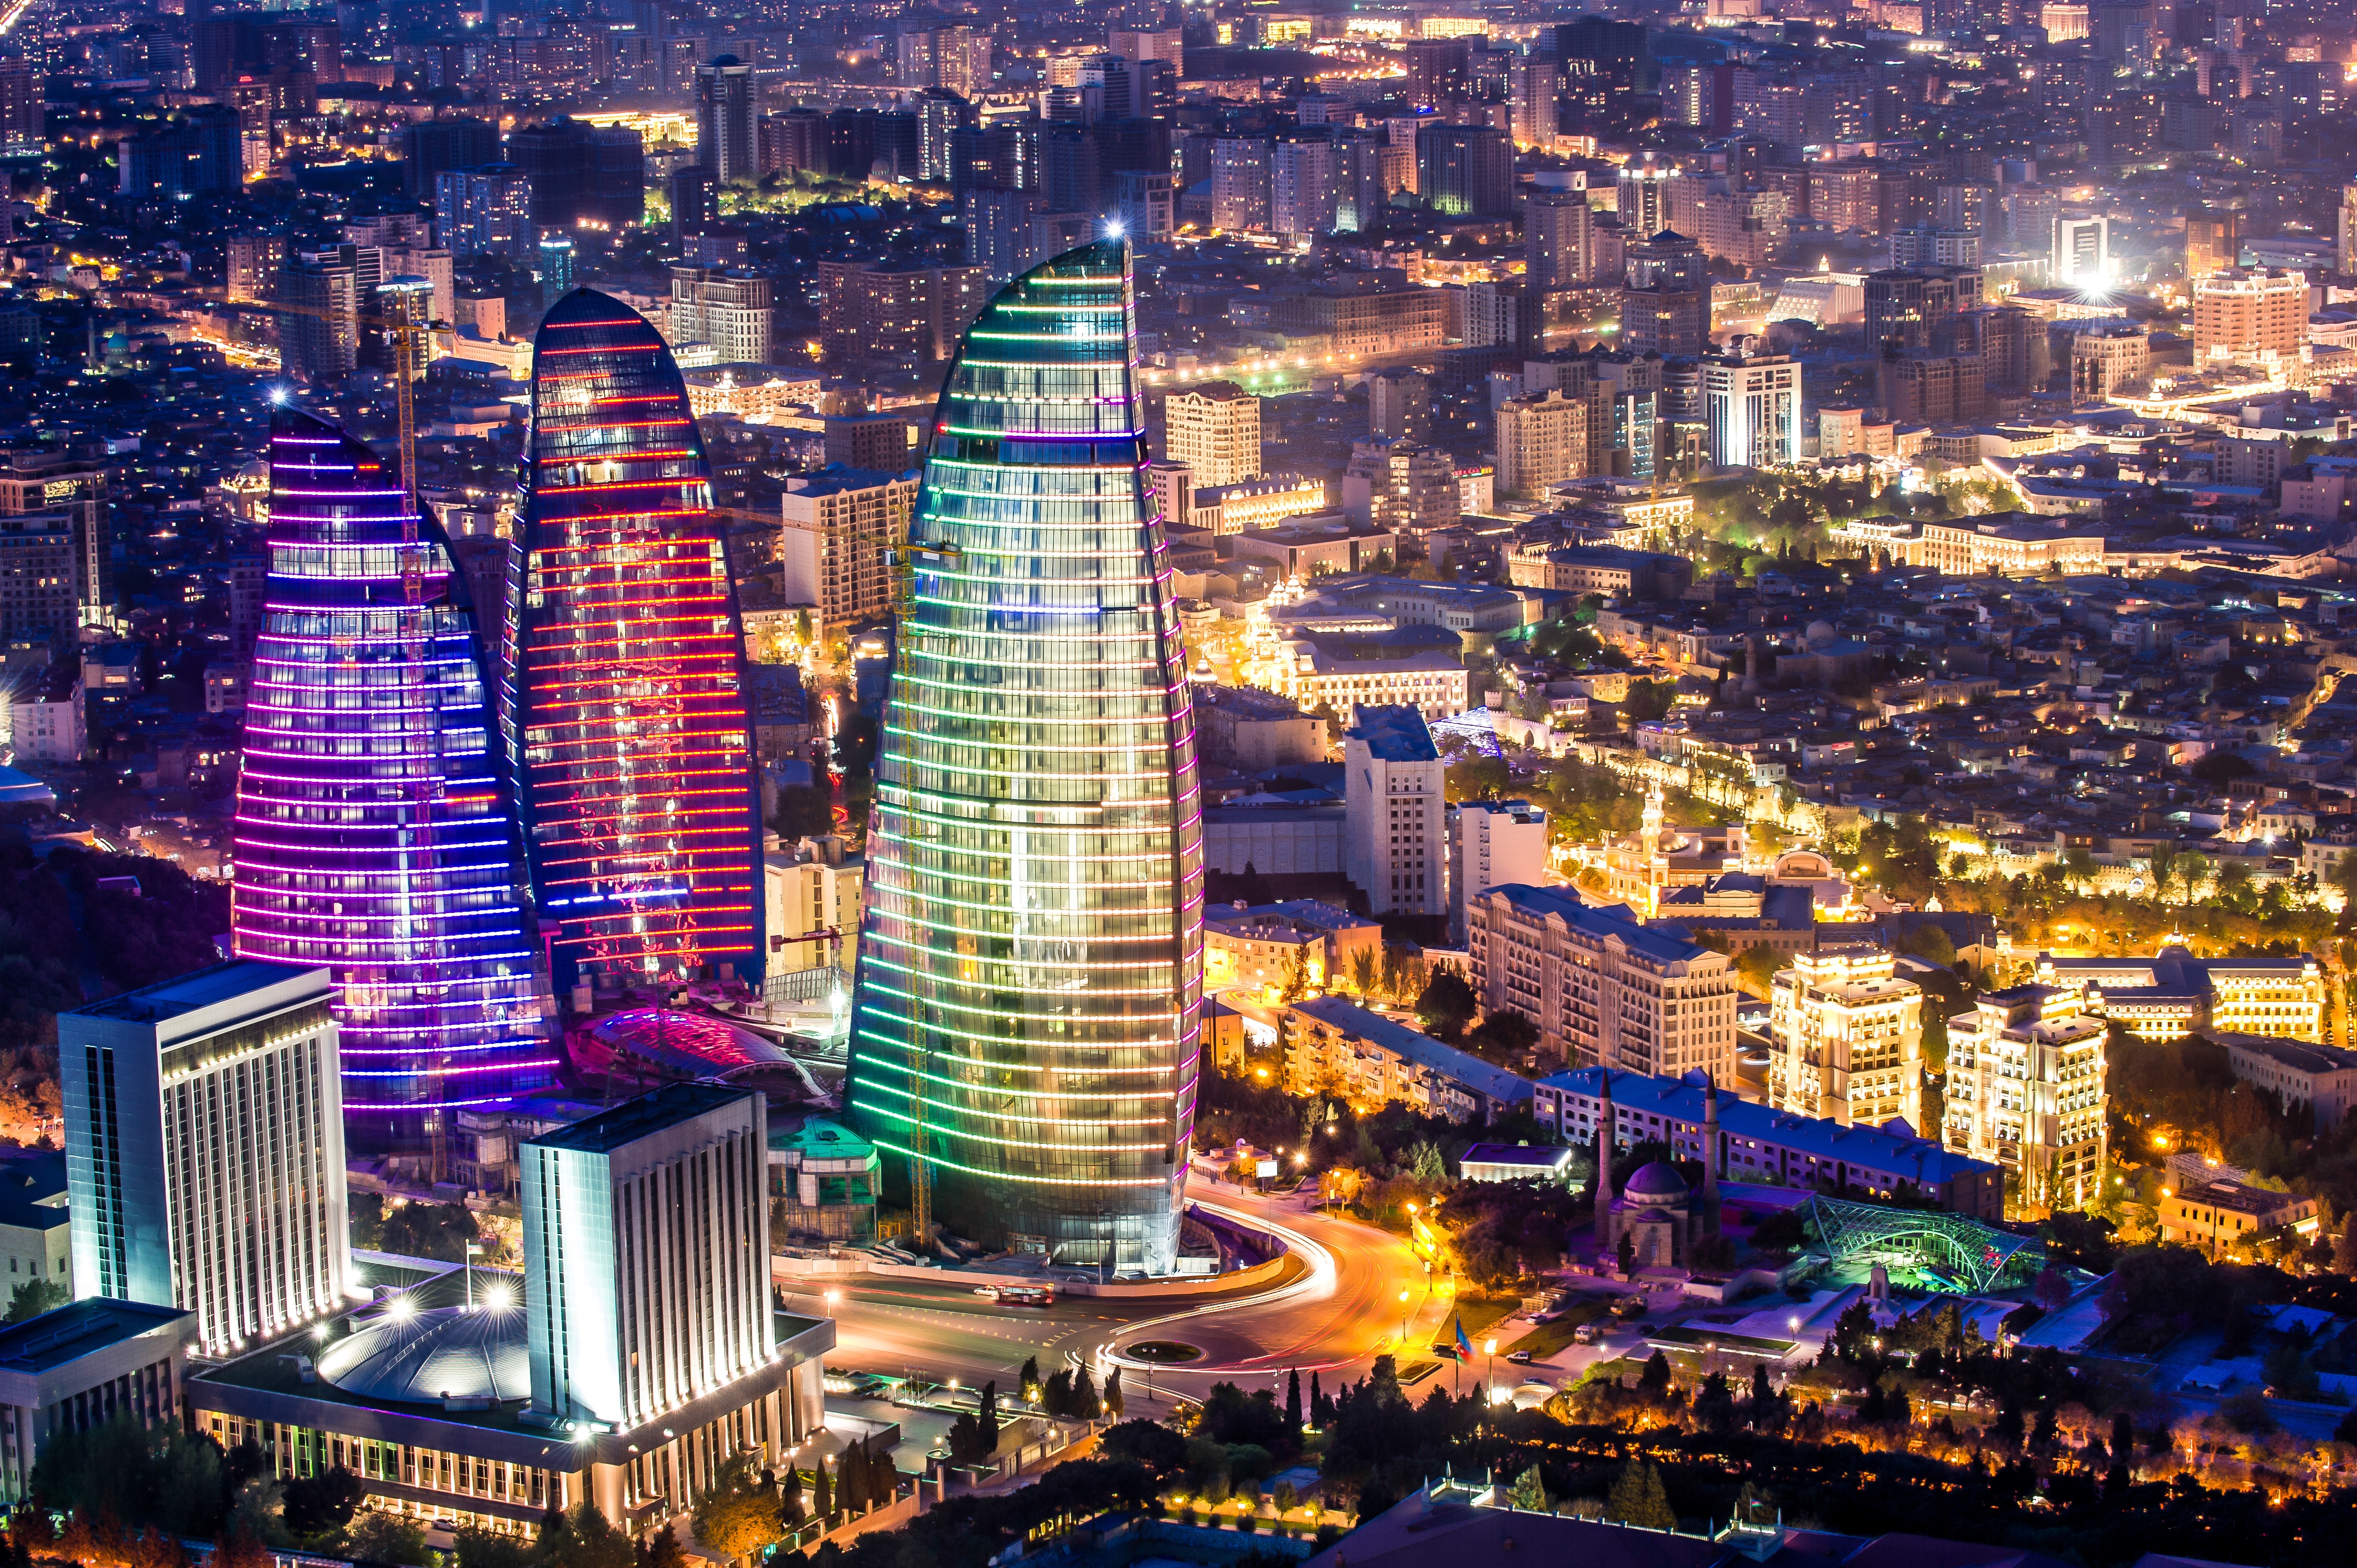 Azerbaijan Baku Flame Towers 4256x2832